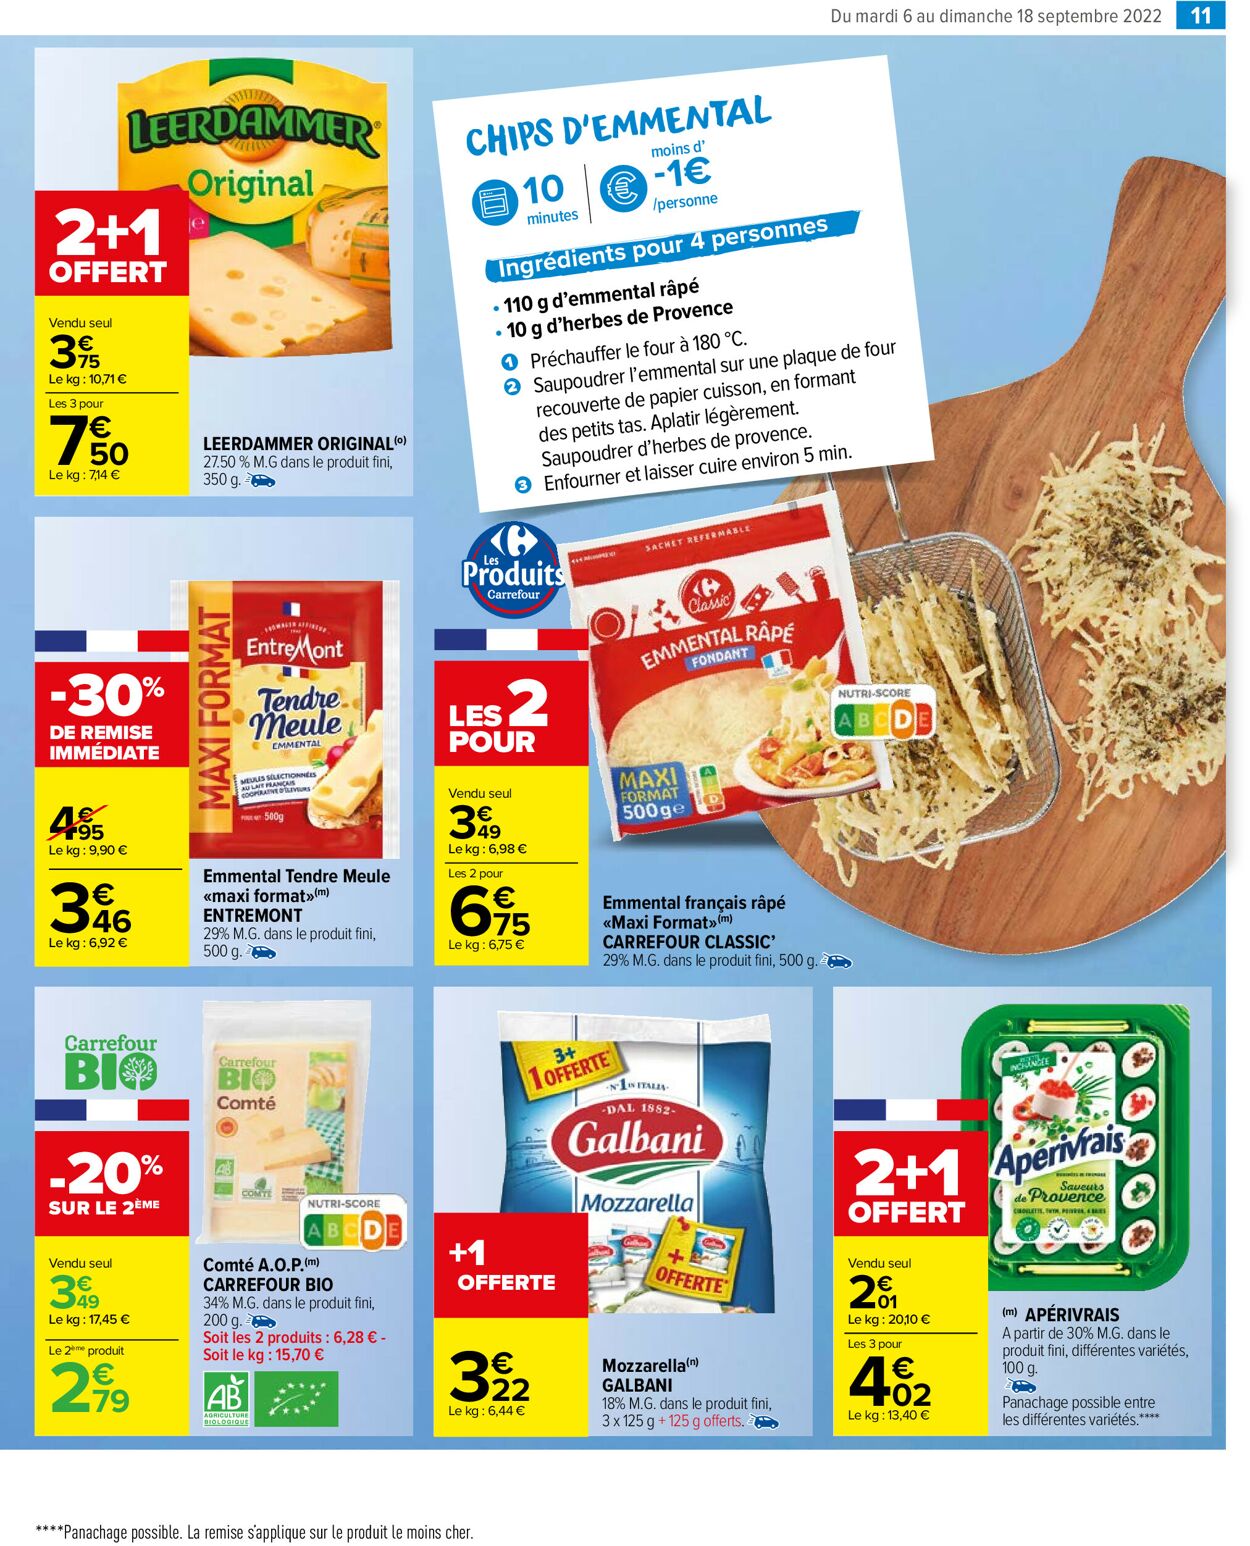 Carrefour Catalogue - 06.09-18.09.2022 (Page 13)